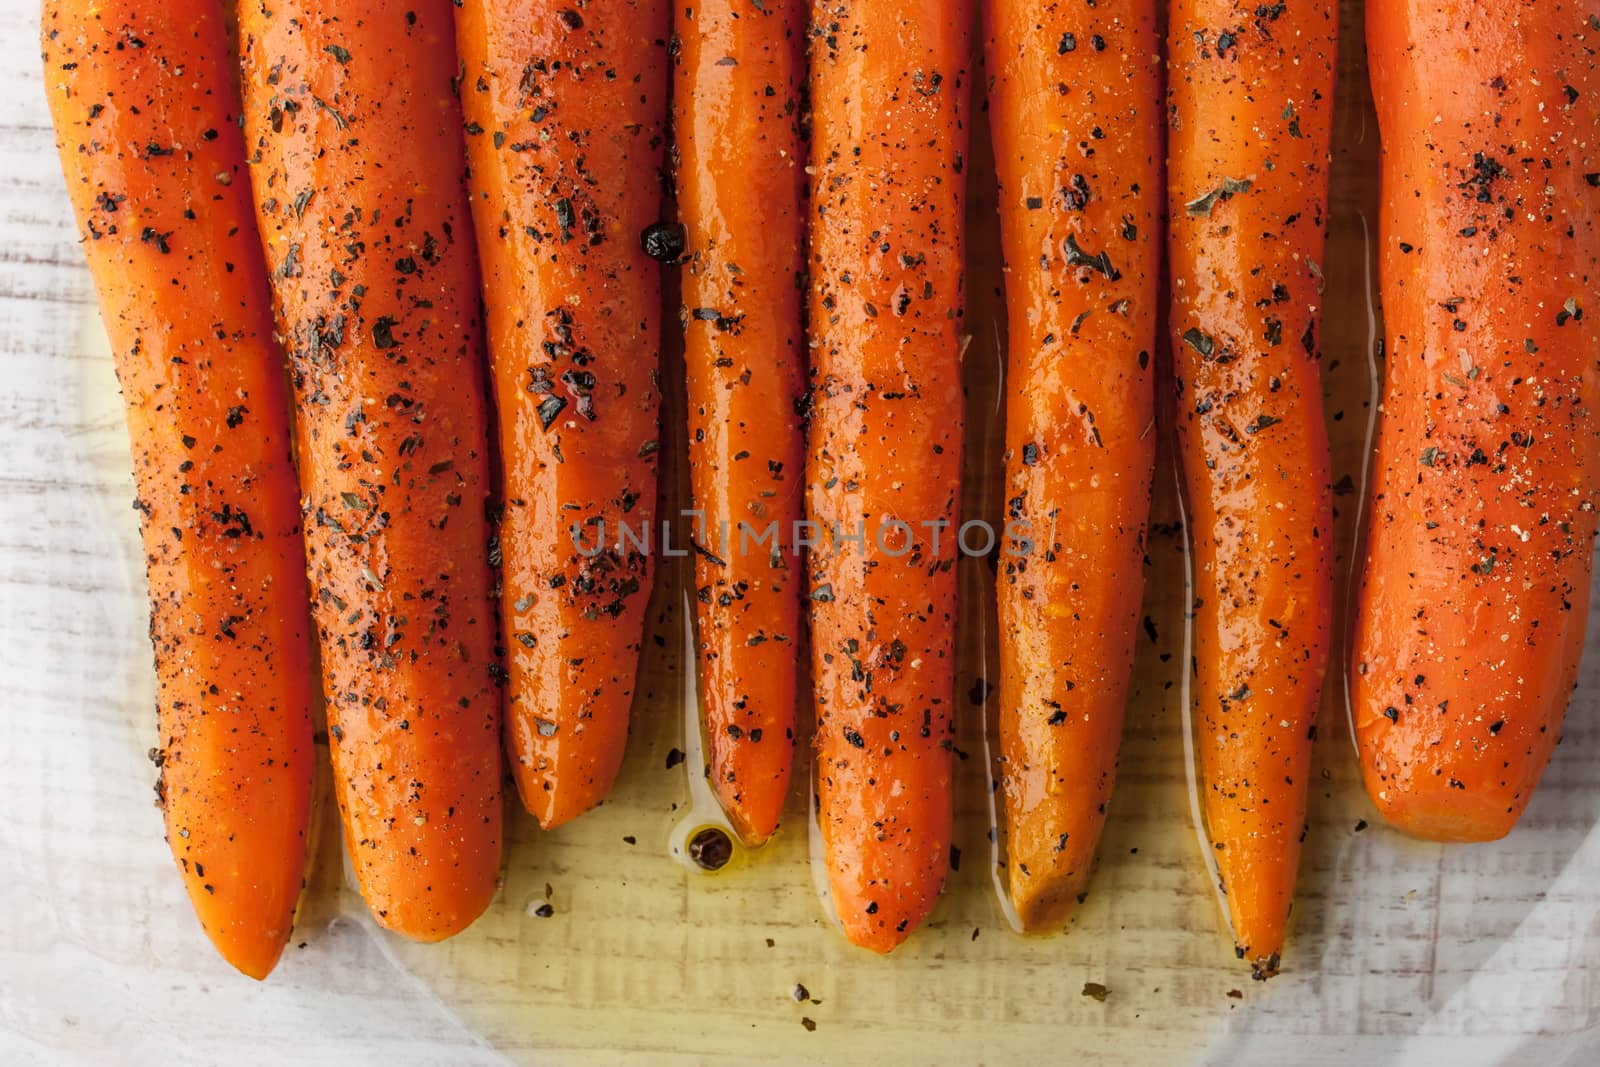 Top of baked carrots with black pepper by Deniskarpenkov